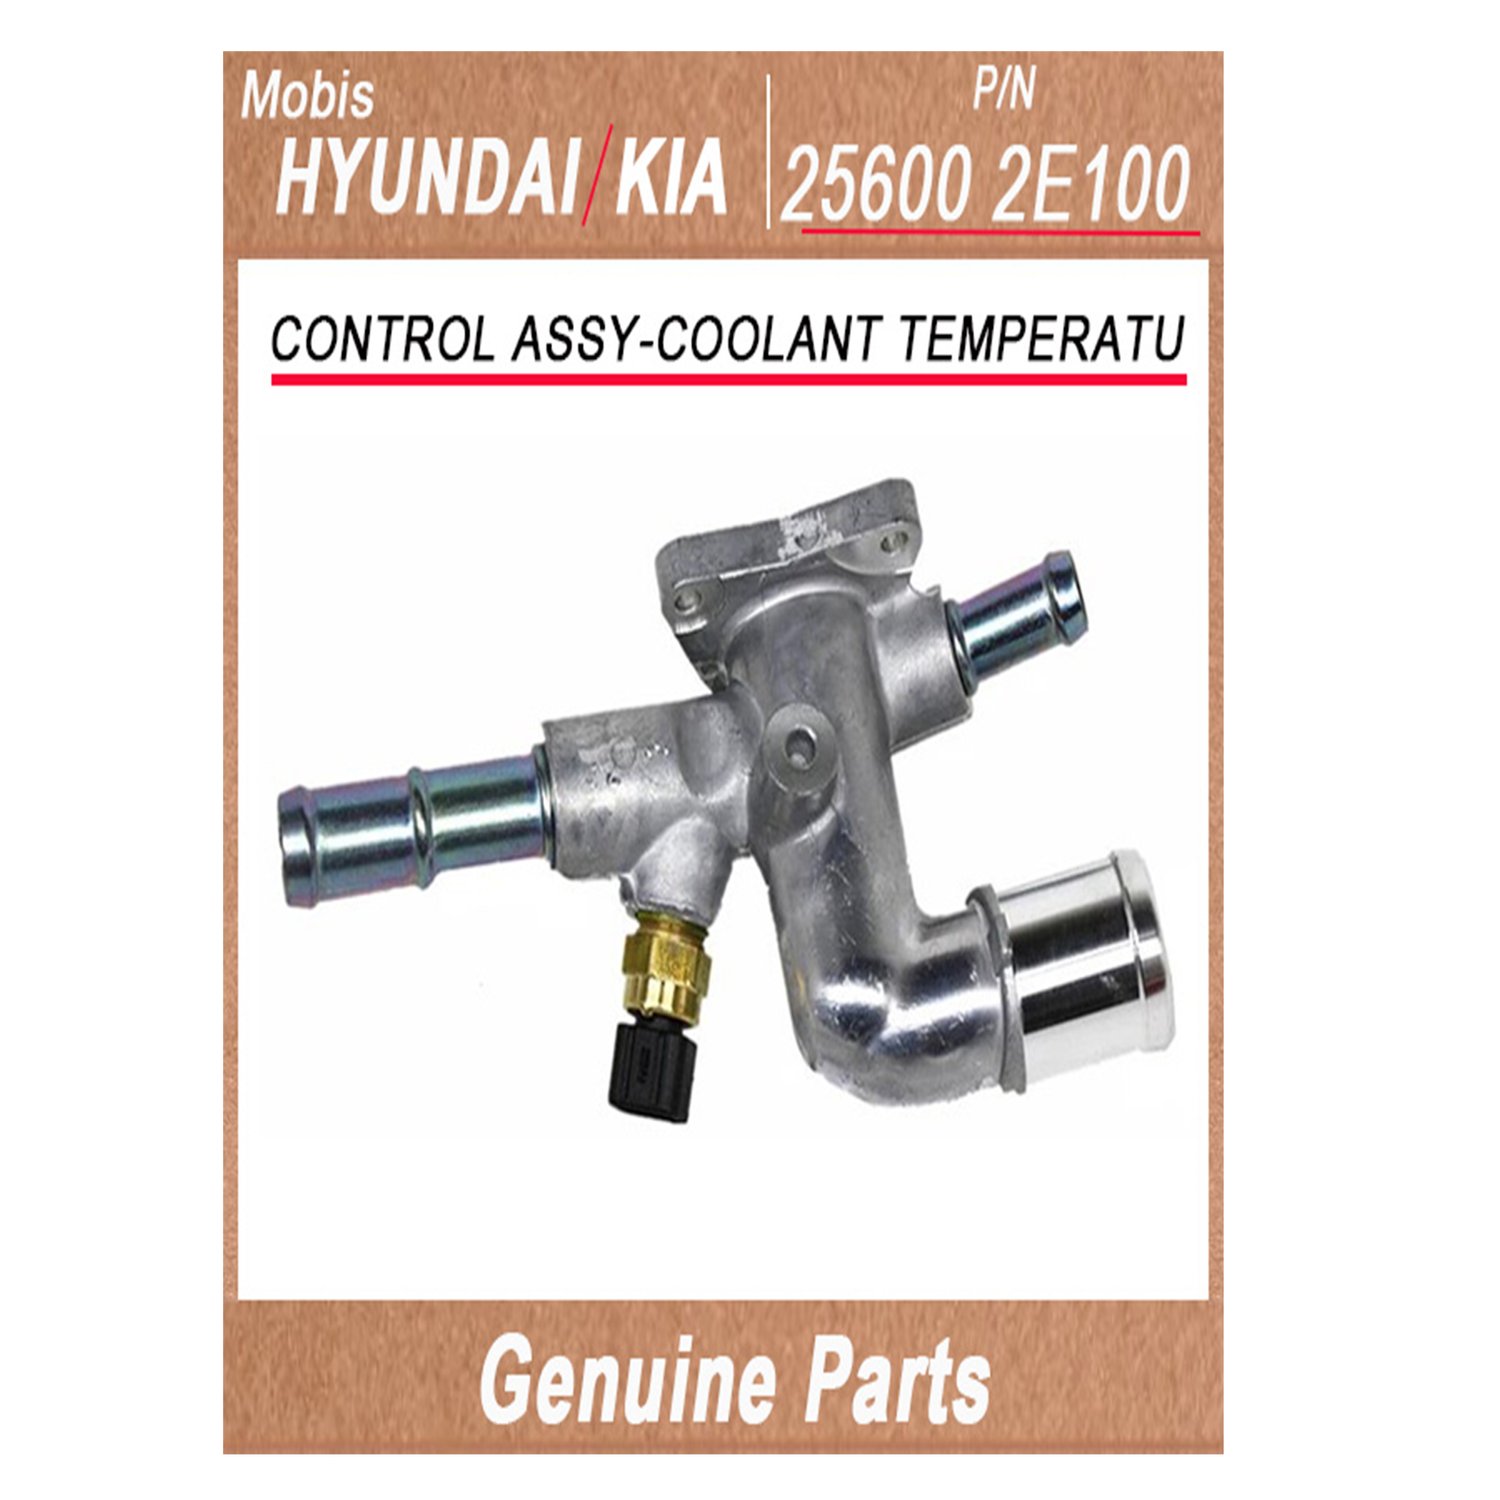 256002E100 _ CONTROL ASSY_COOLANT TEMPERATU _ Genuine Korean Automotive Spare Parts _ Hyundai Kia _M